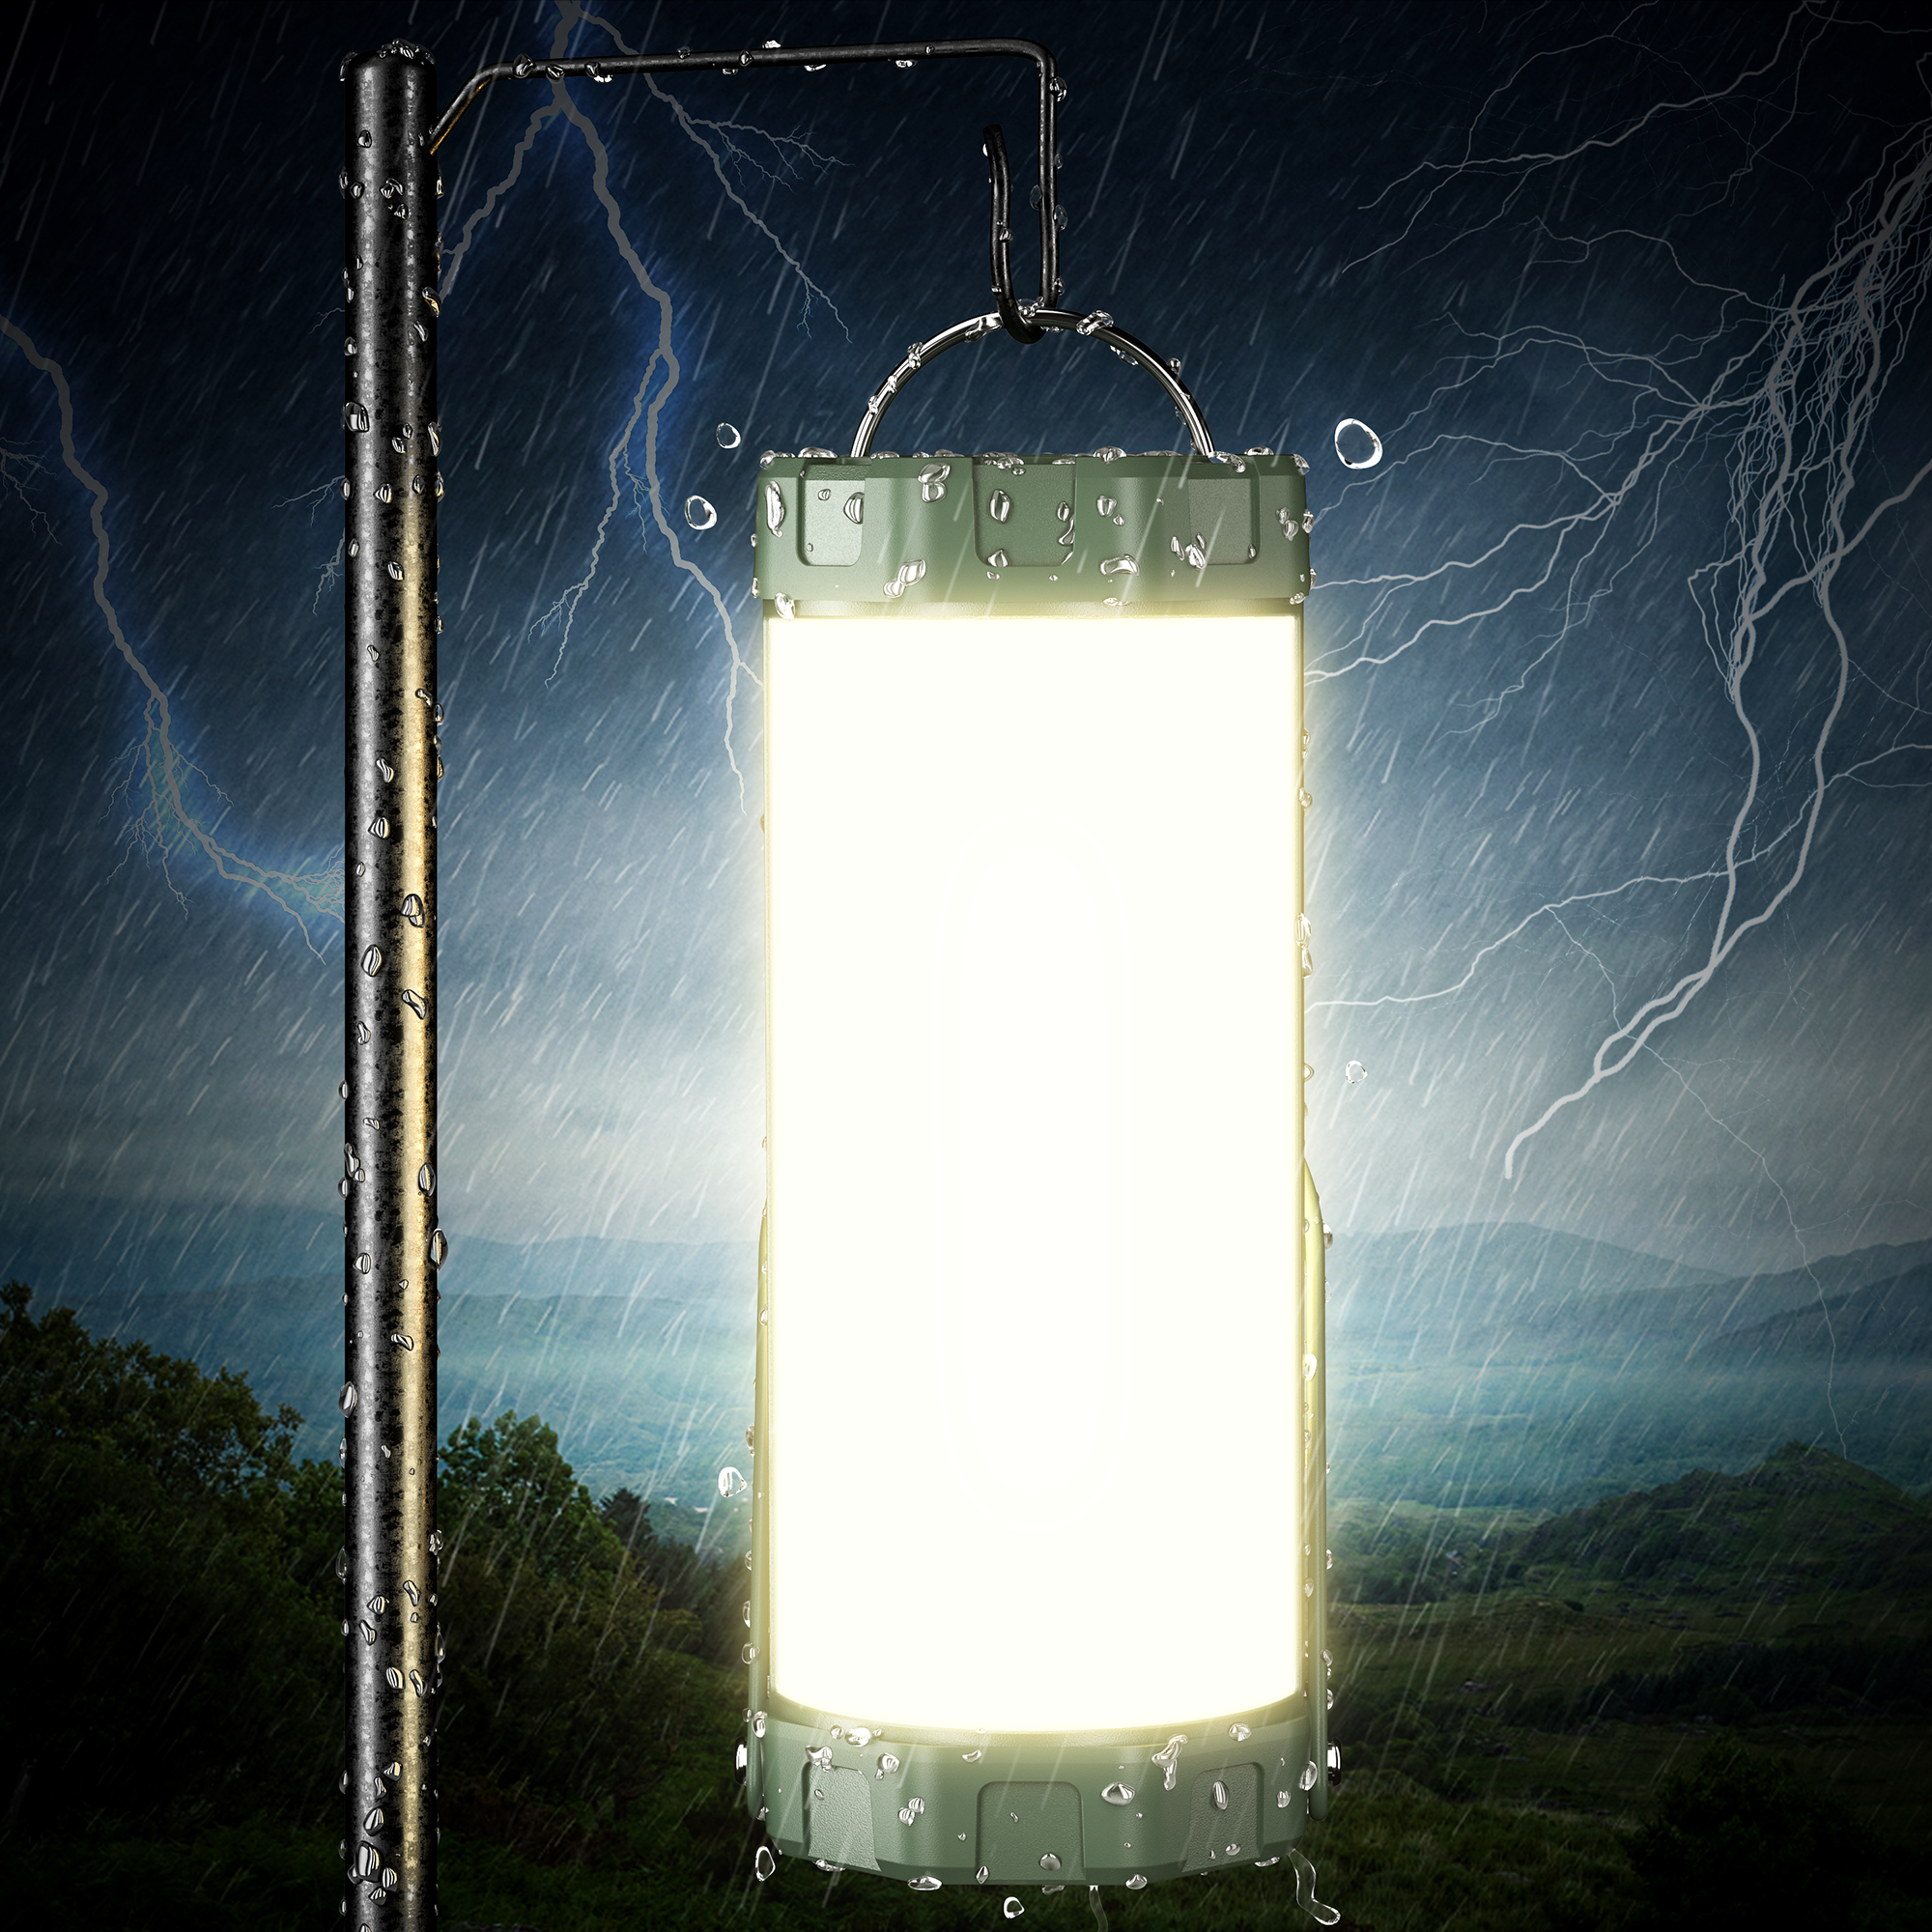 Glocusent Survival Camping Lantern & Emergency Light | Glocusent